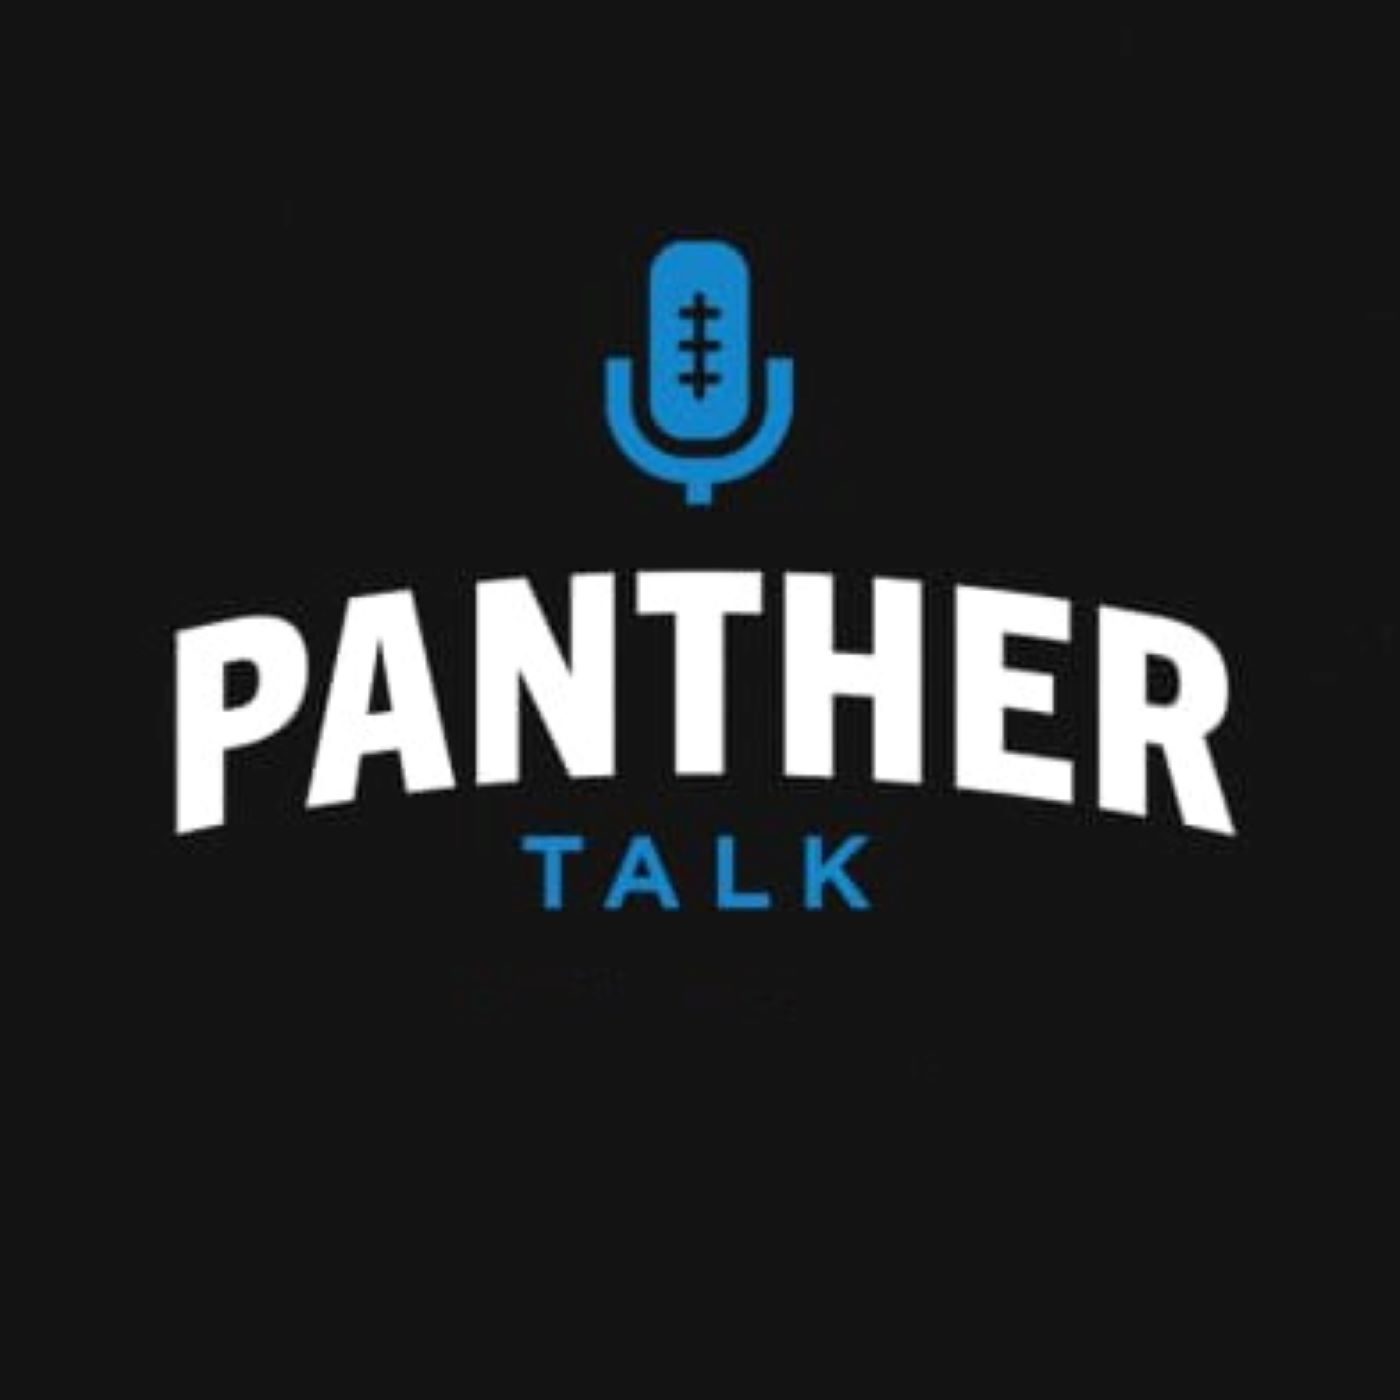 Panther Talk (December 18th)